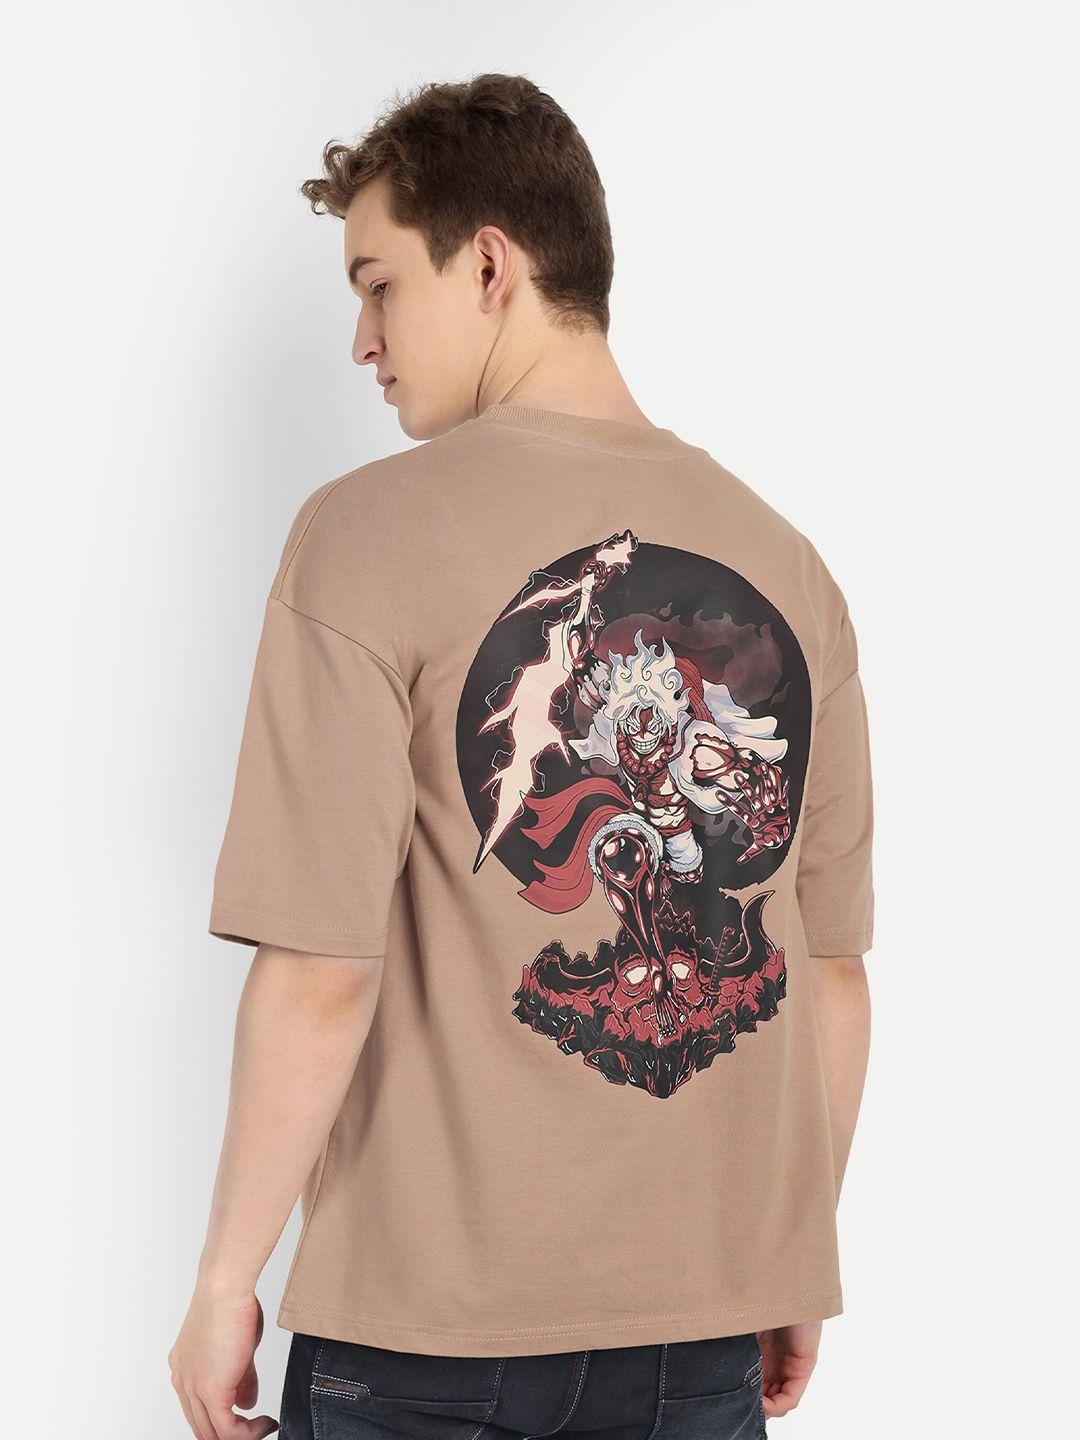 blurr round neck short sleeves graphic printed cotton t-shirt